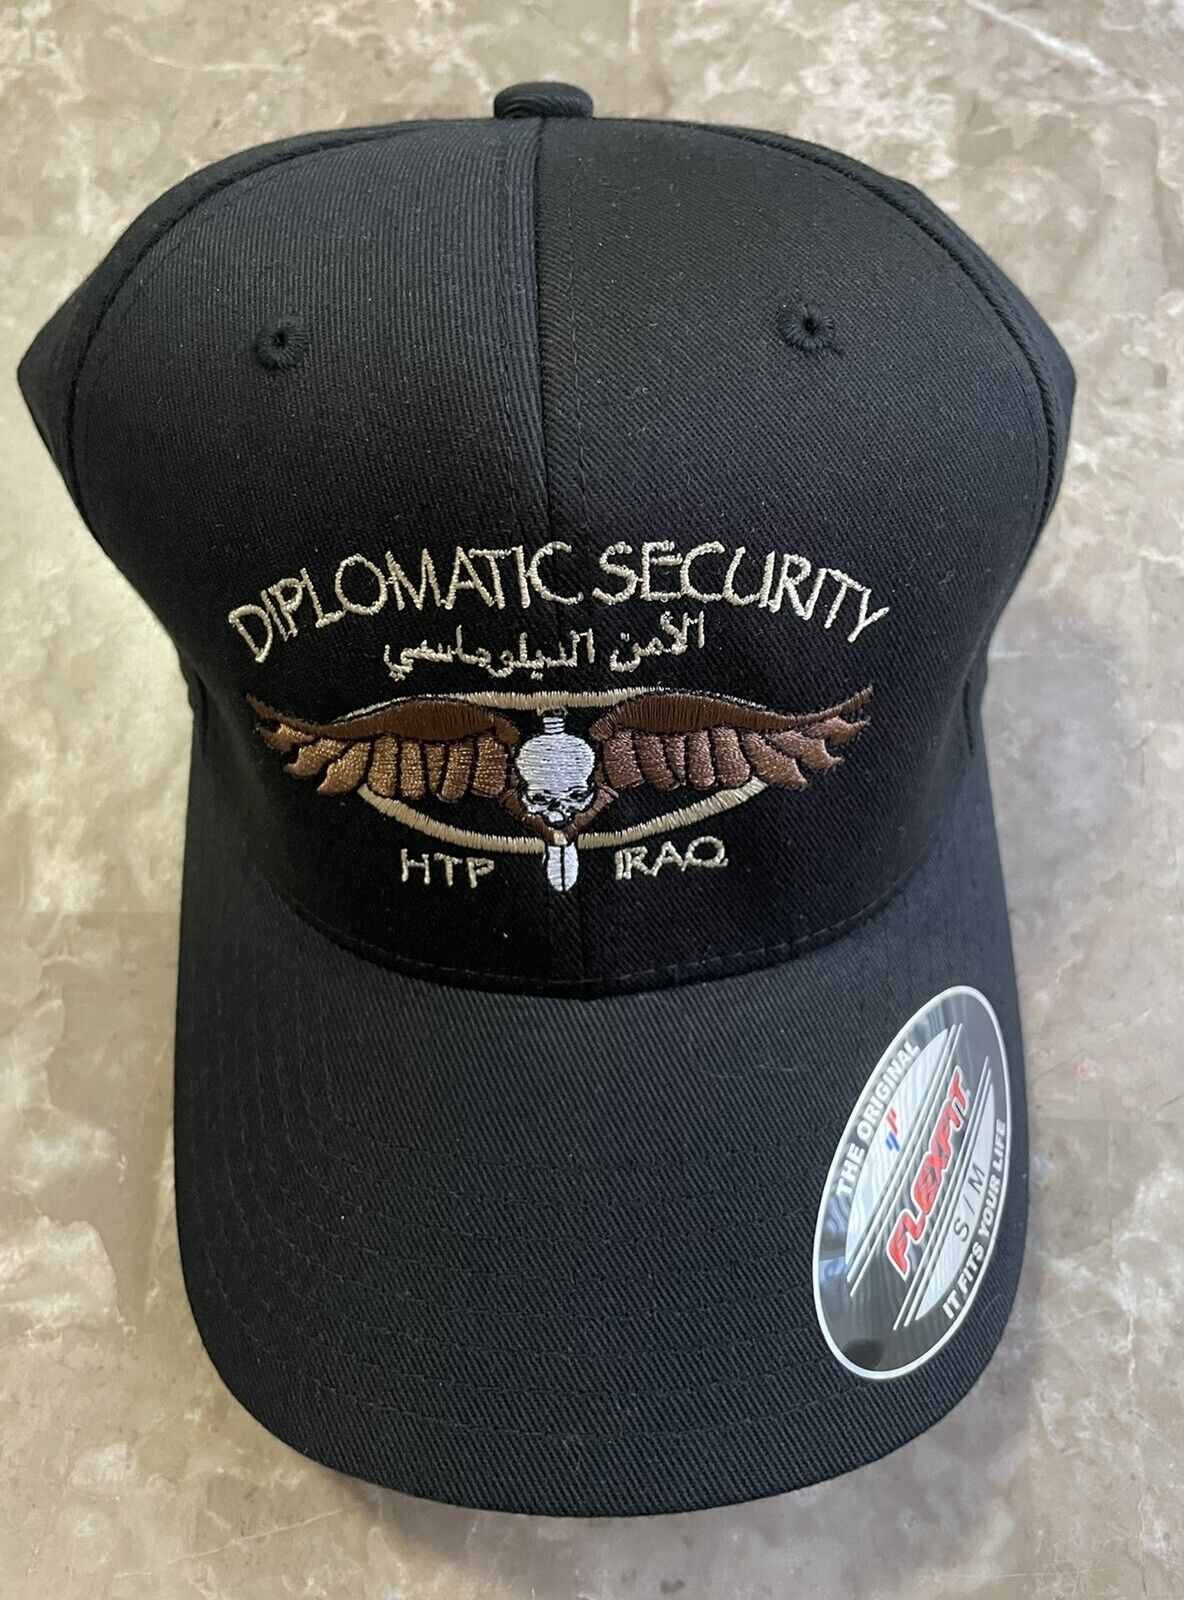 Diplomatic Security ( Blackwater ) HTP, Iraq, Flexfit S-M Hat/Cap